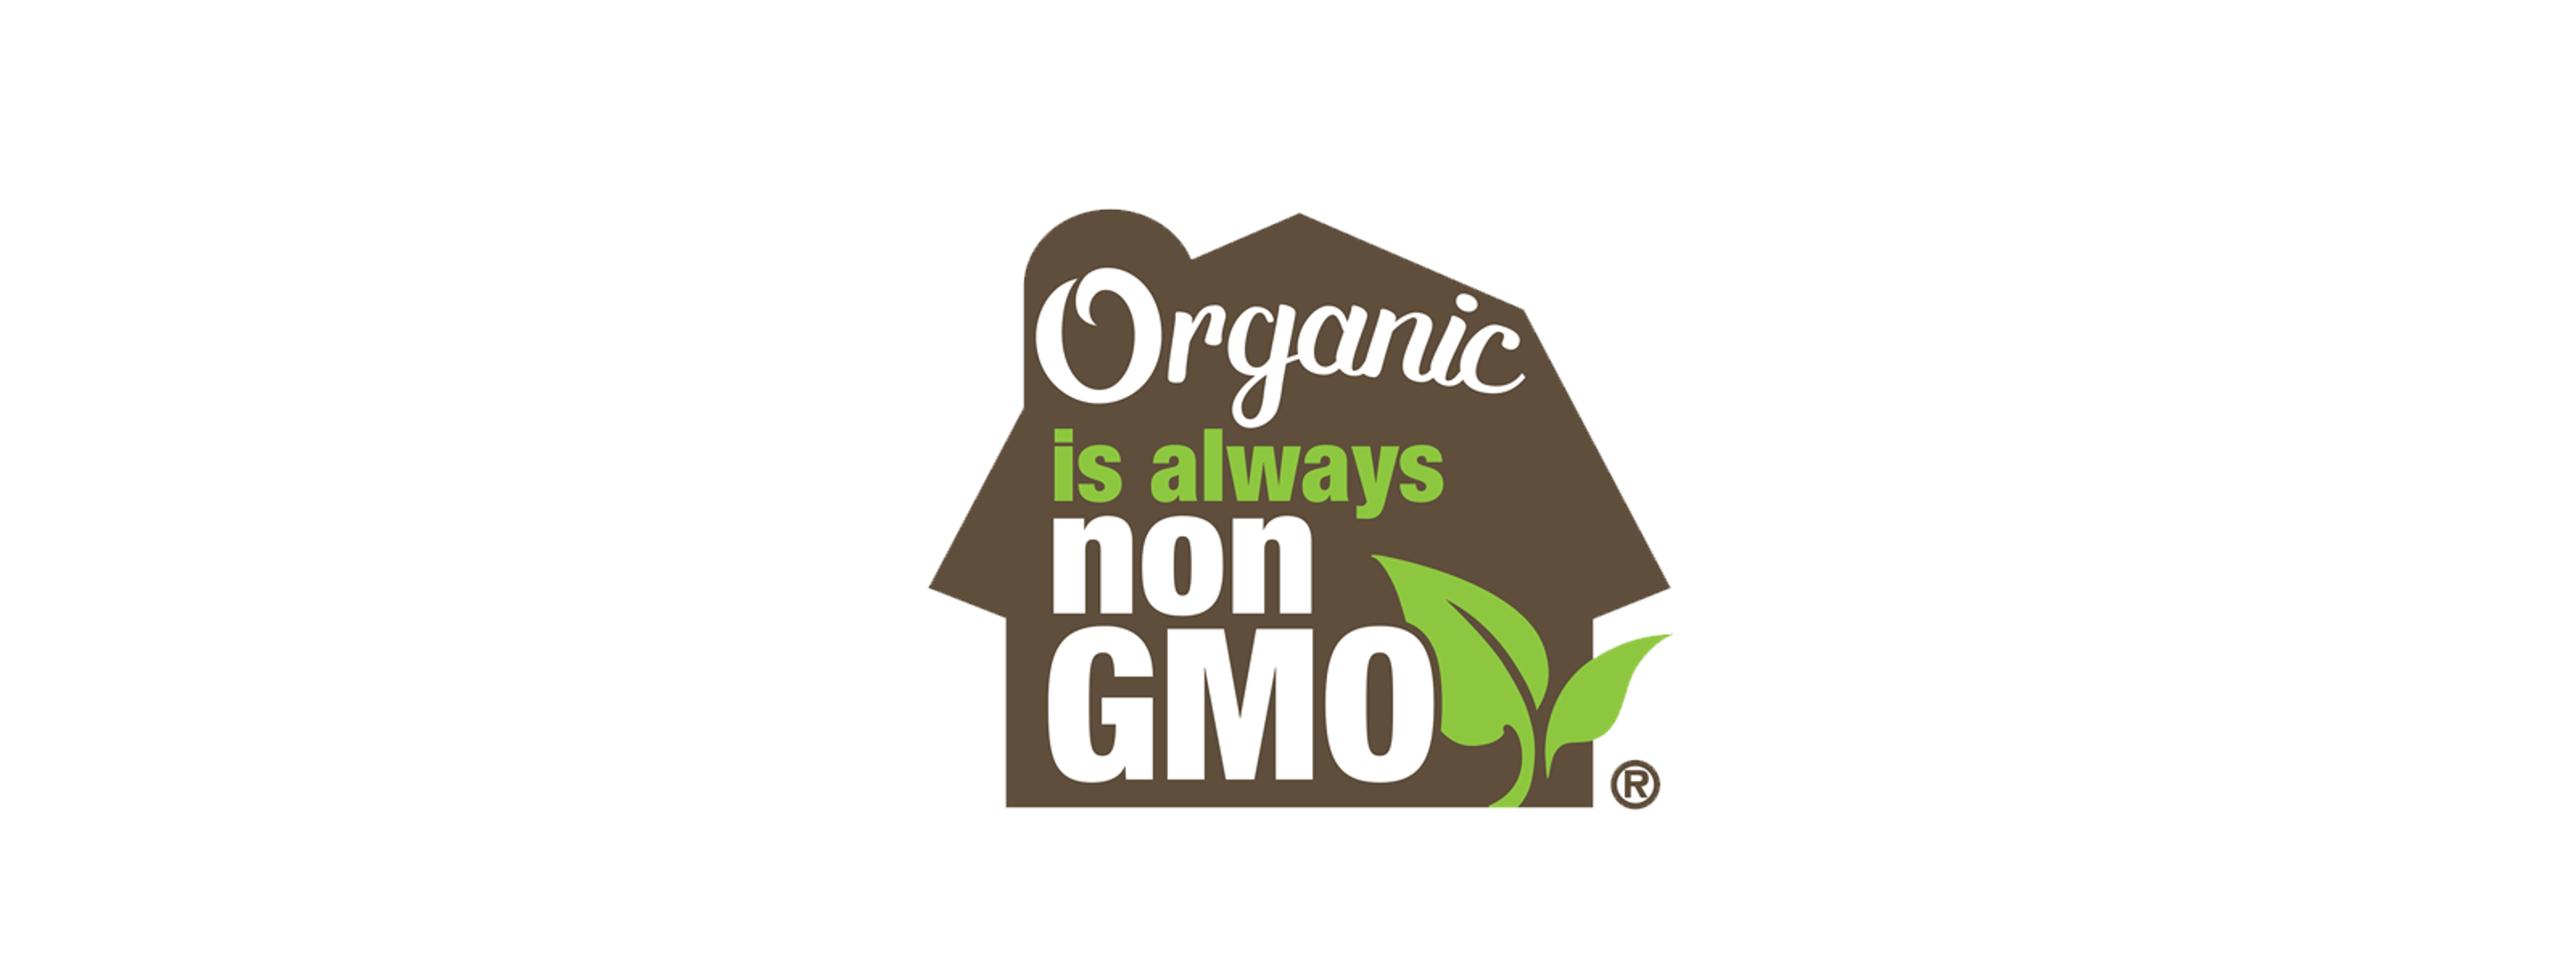 A logo that says organic is always non GMO